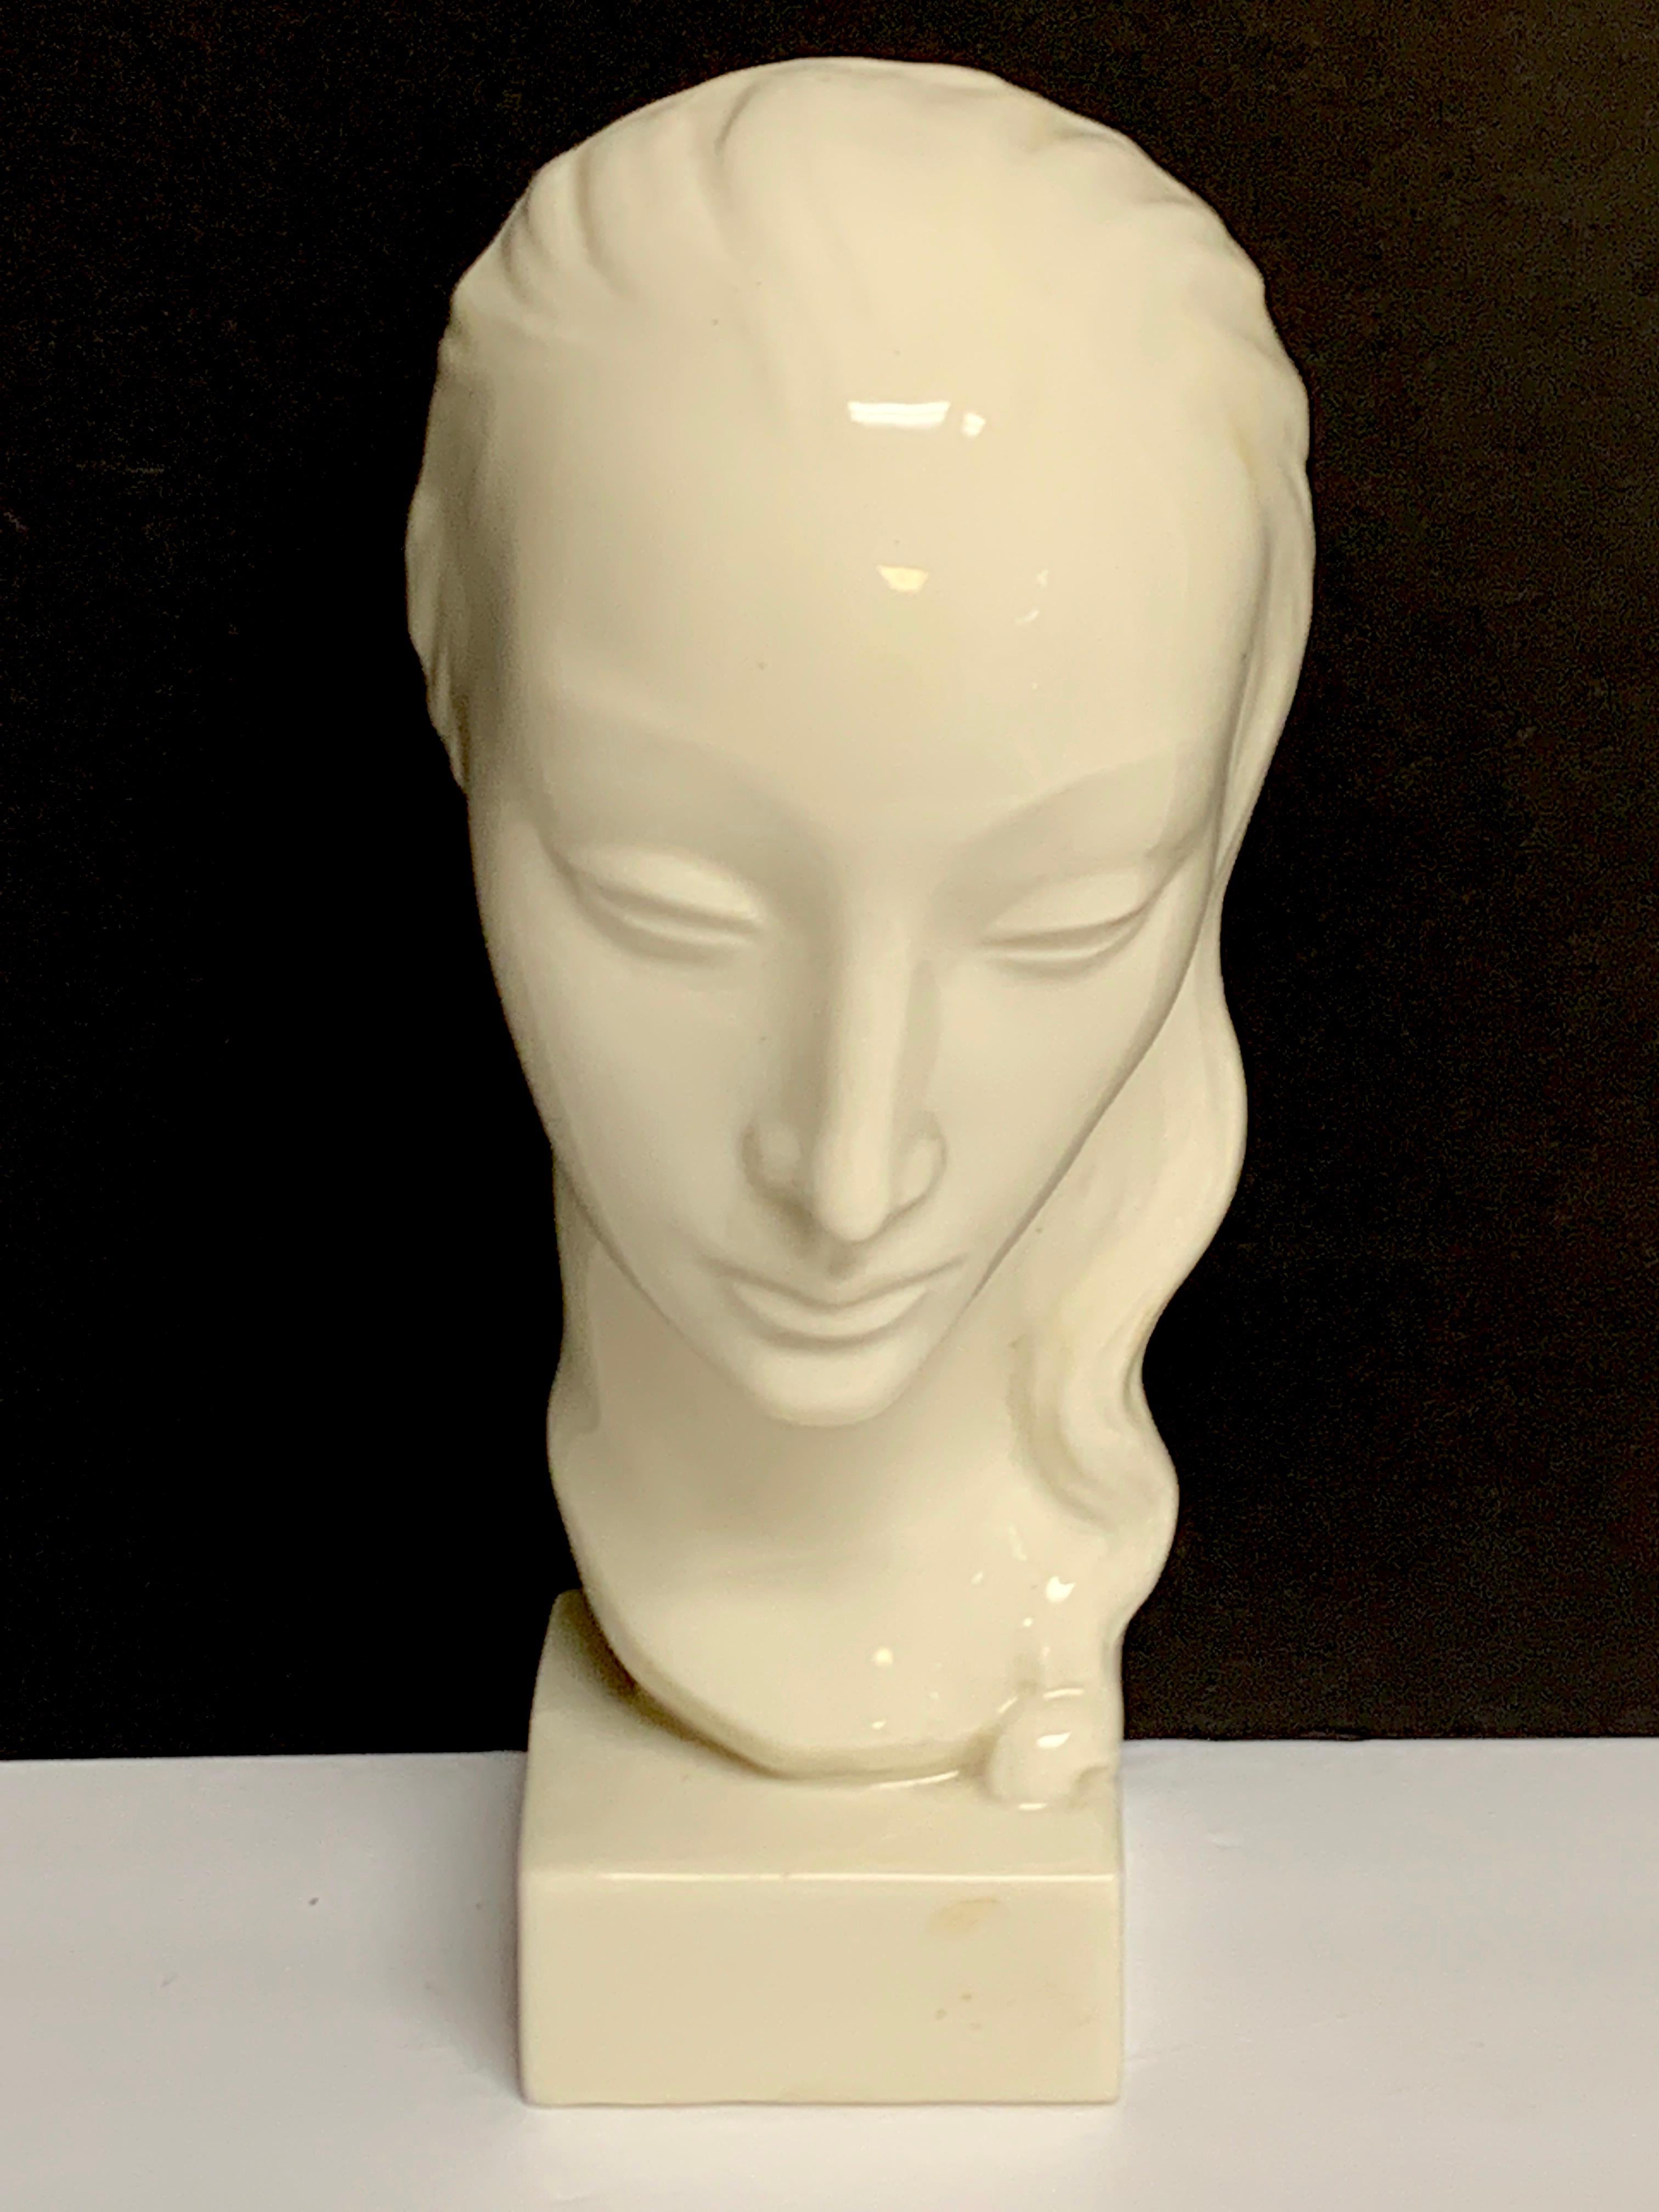 Art Deco Portrait Bust of a Woman, Geza De Vegh for Lenox
circa 1930s, raised on a 2.5